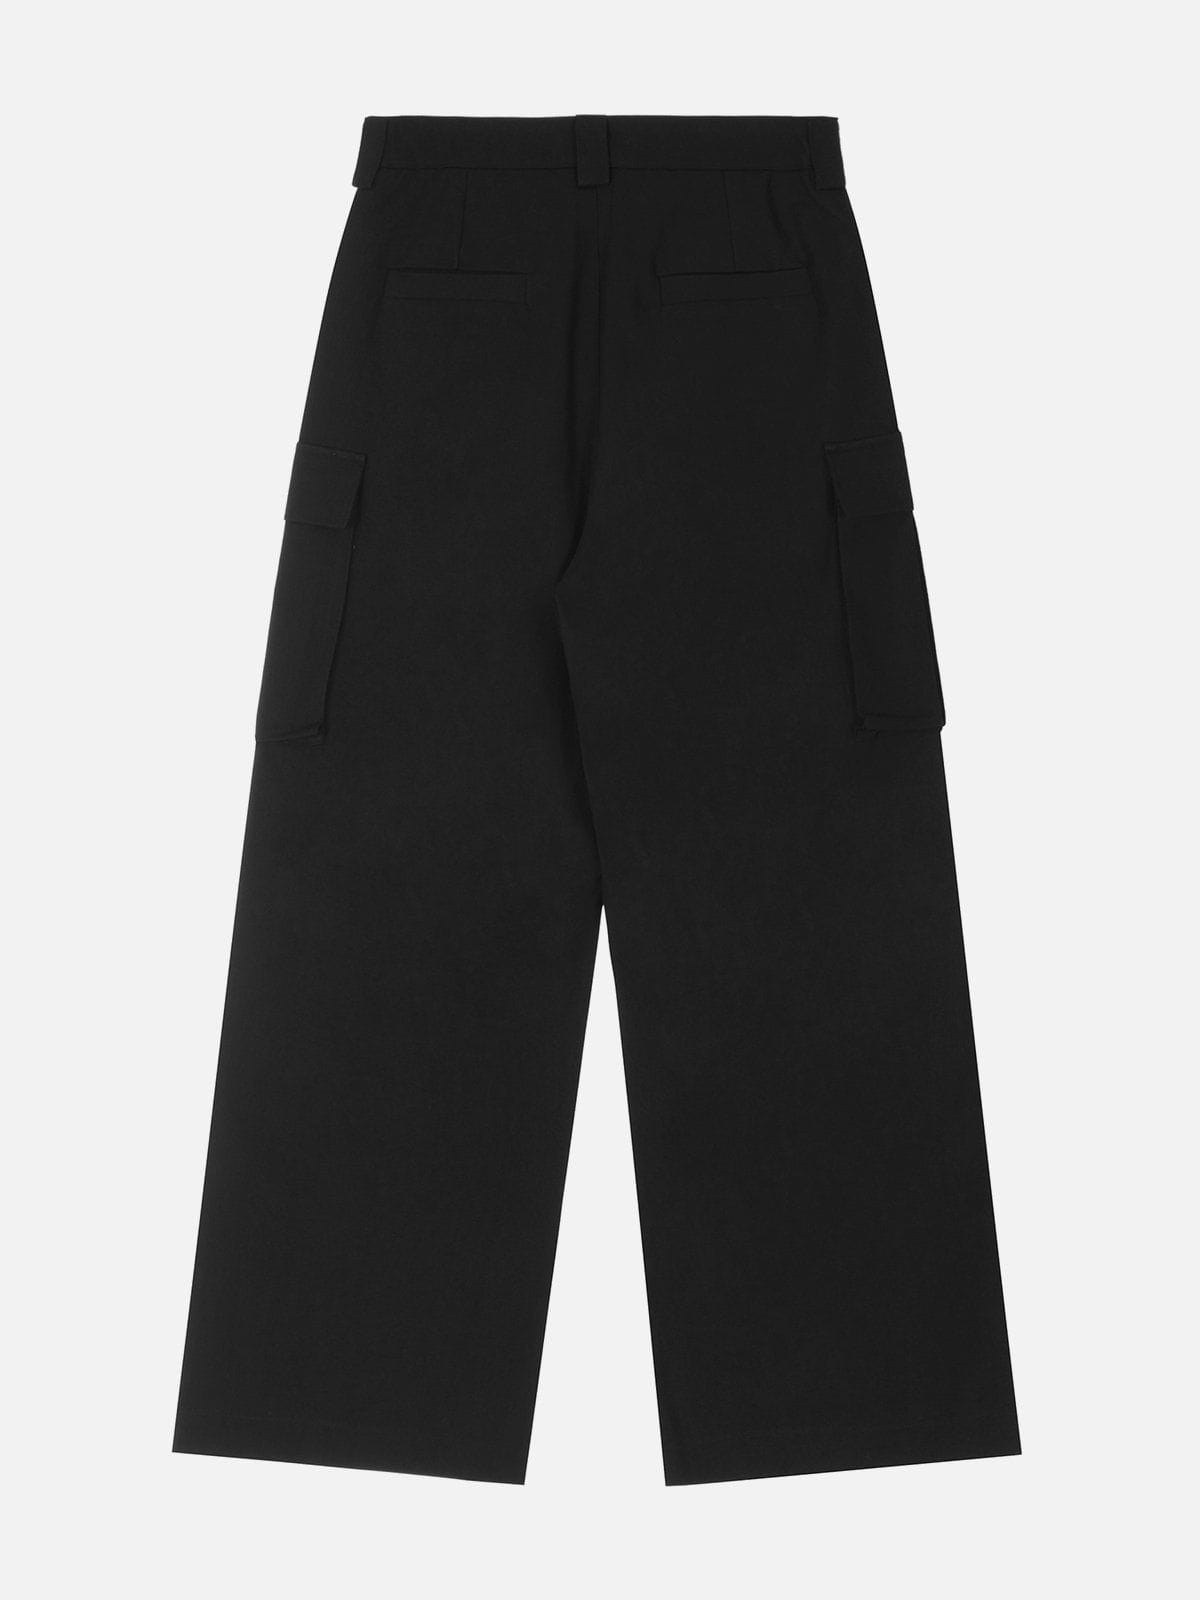 Sneakerland® - Large Pockets Cargo Pants